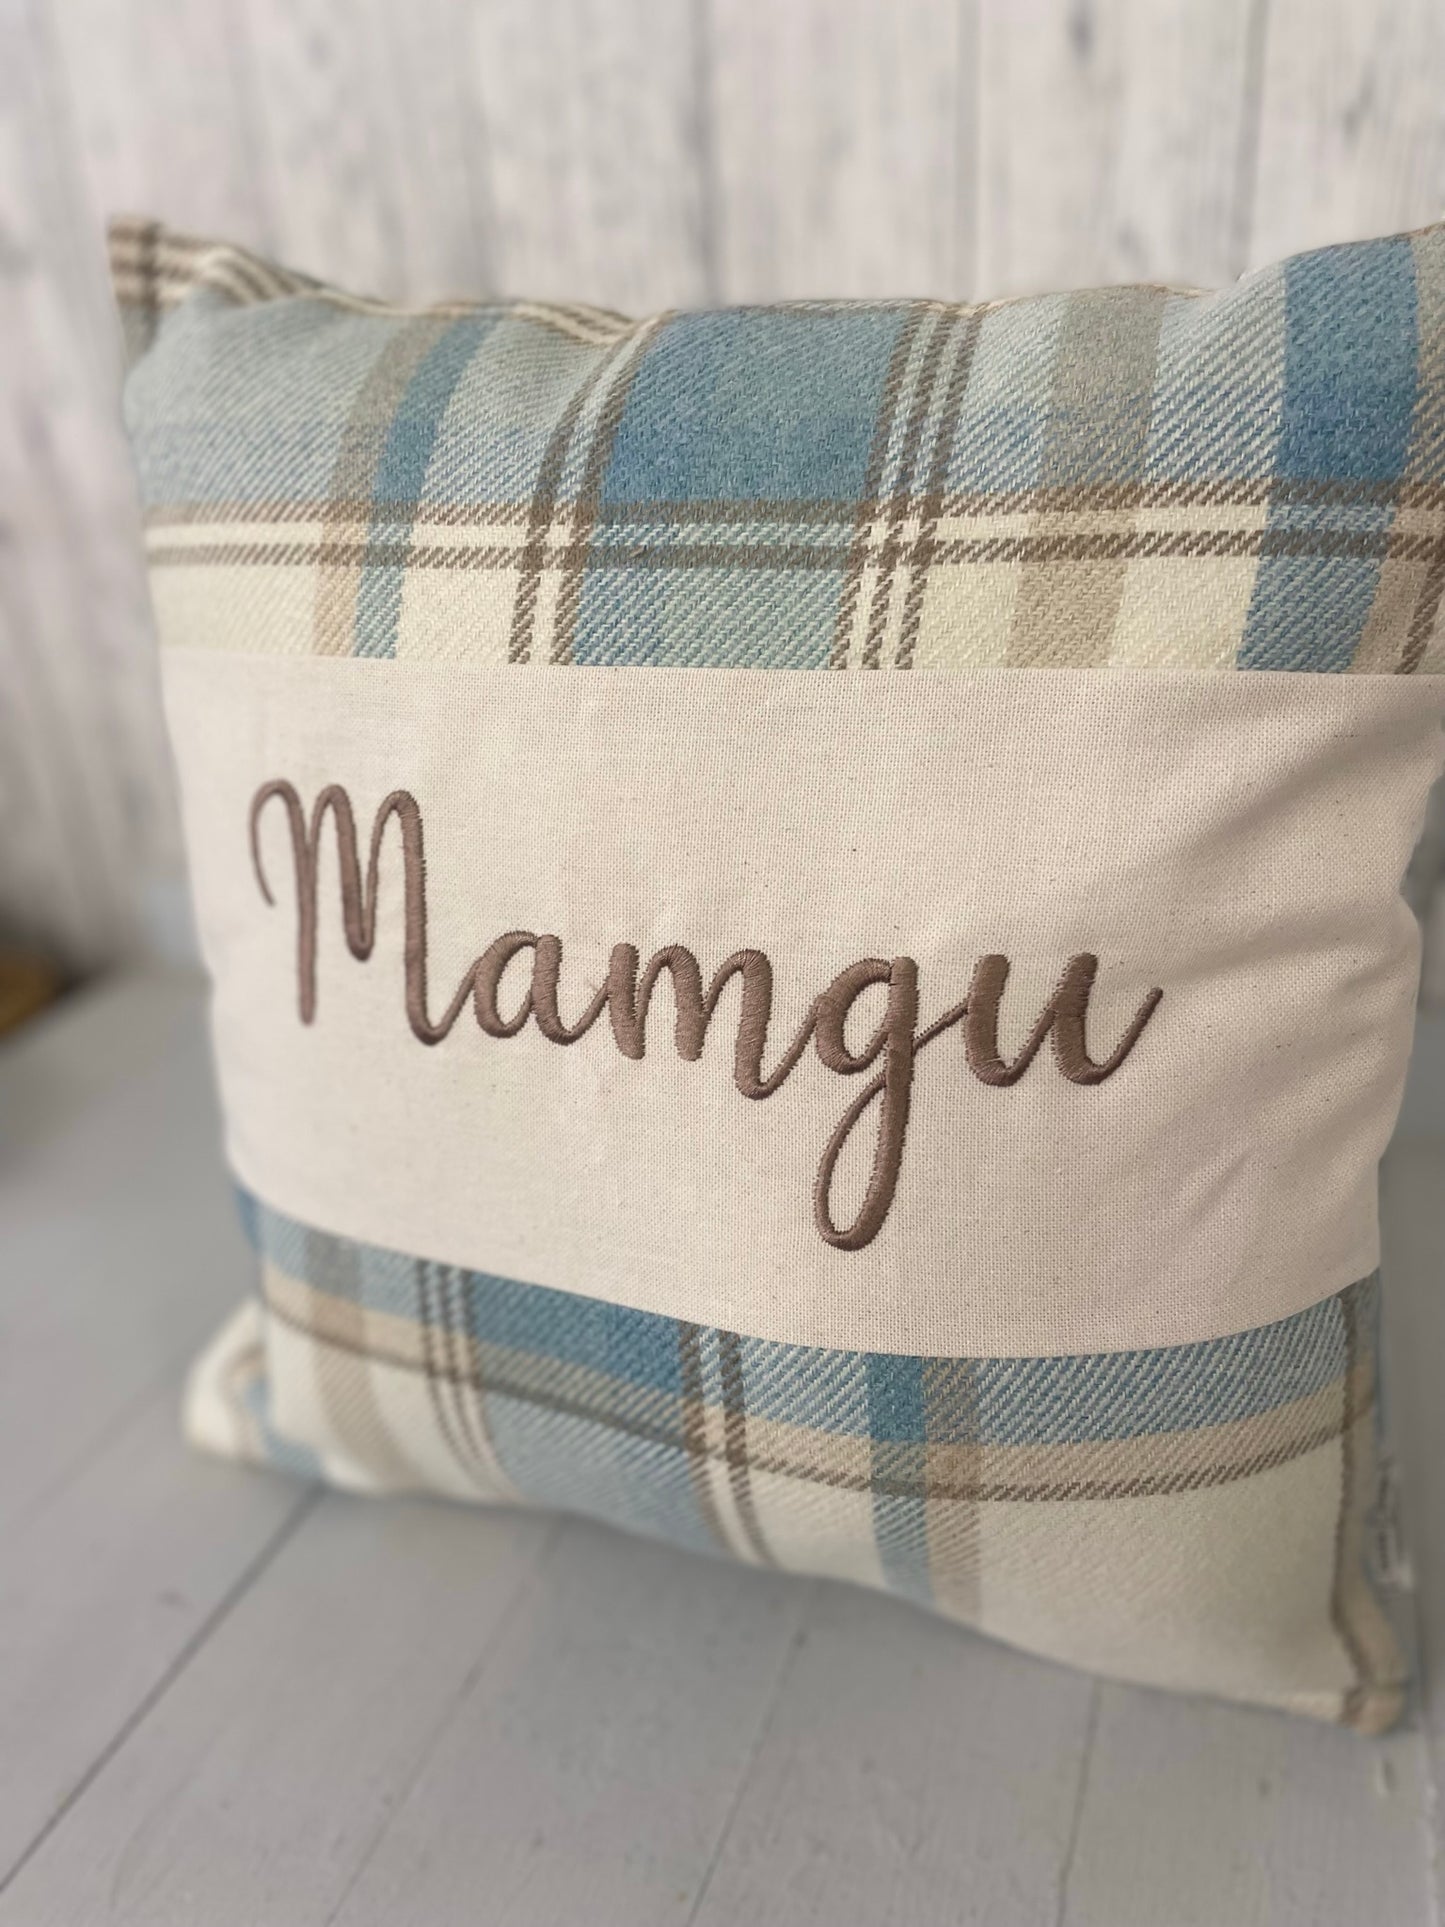 Mamgu Square Wool Touch Cushion